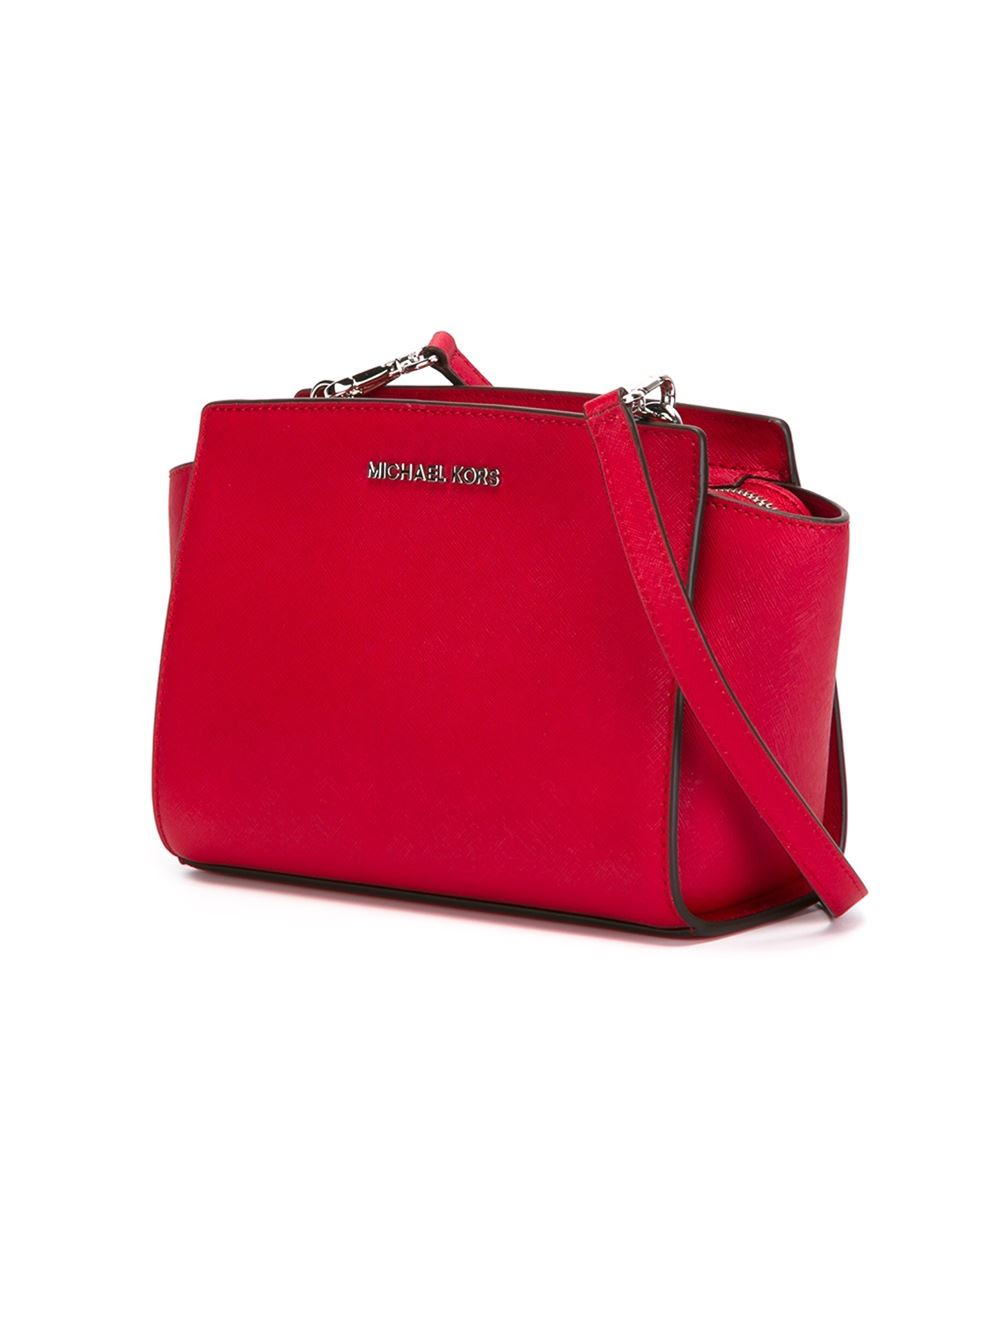 Michael Kors Selma Medium Studded Leather Messenger Bag Red